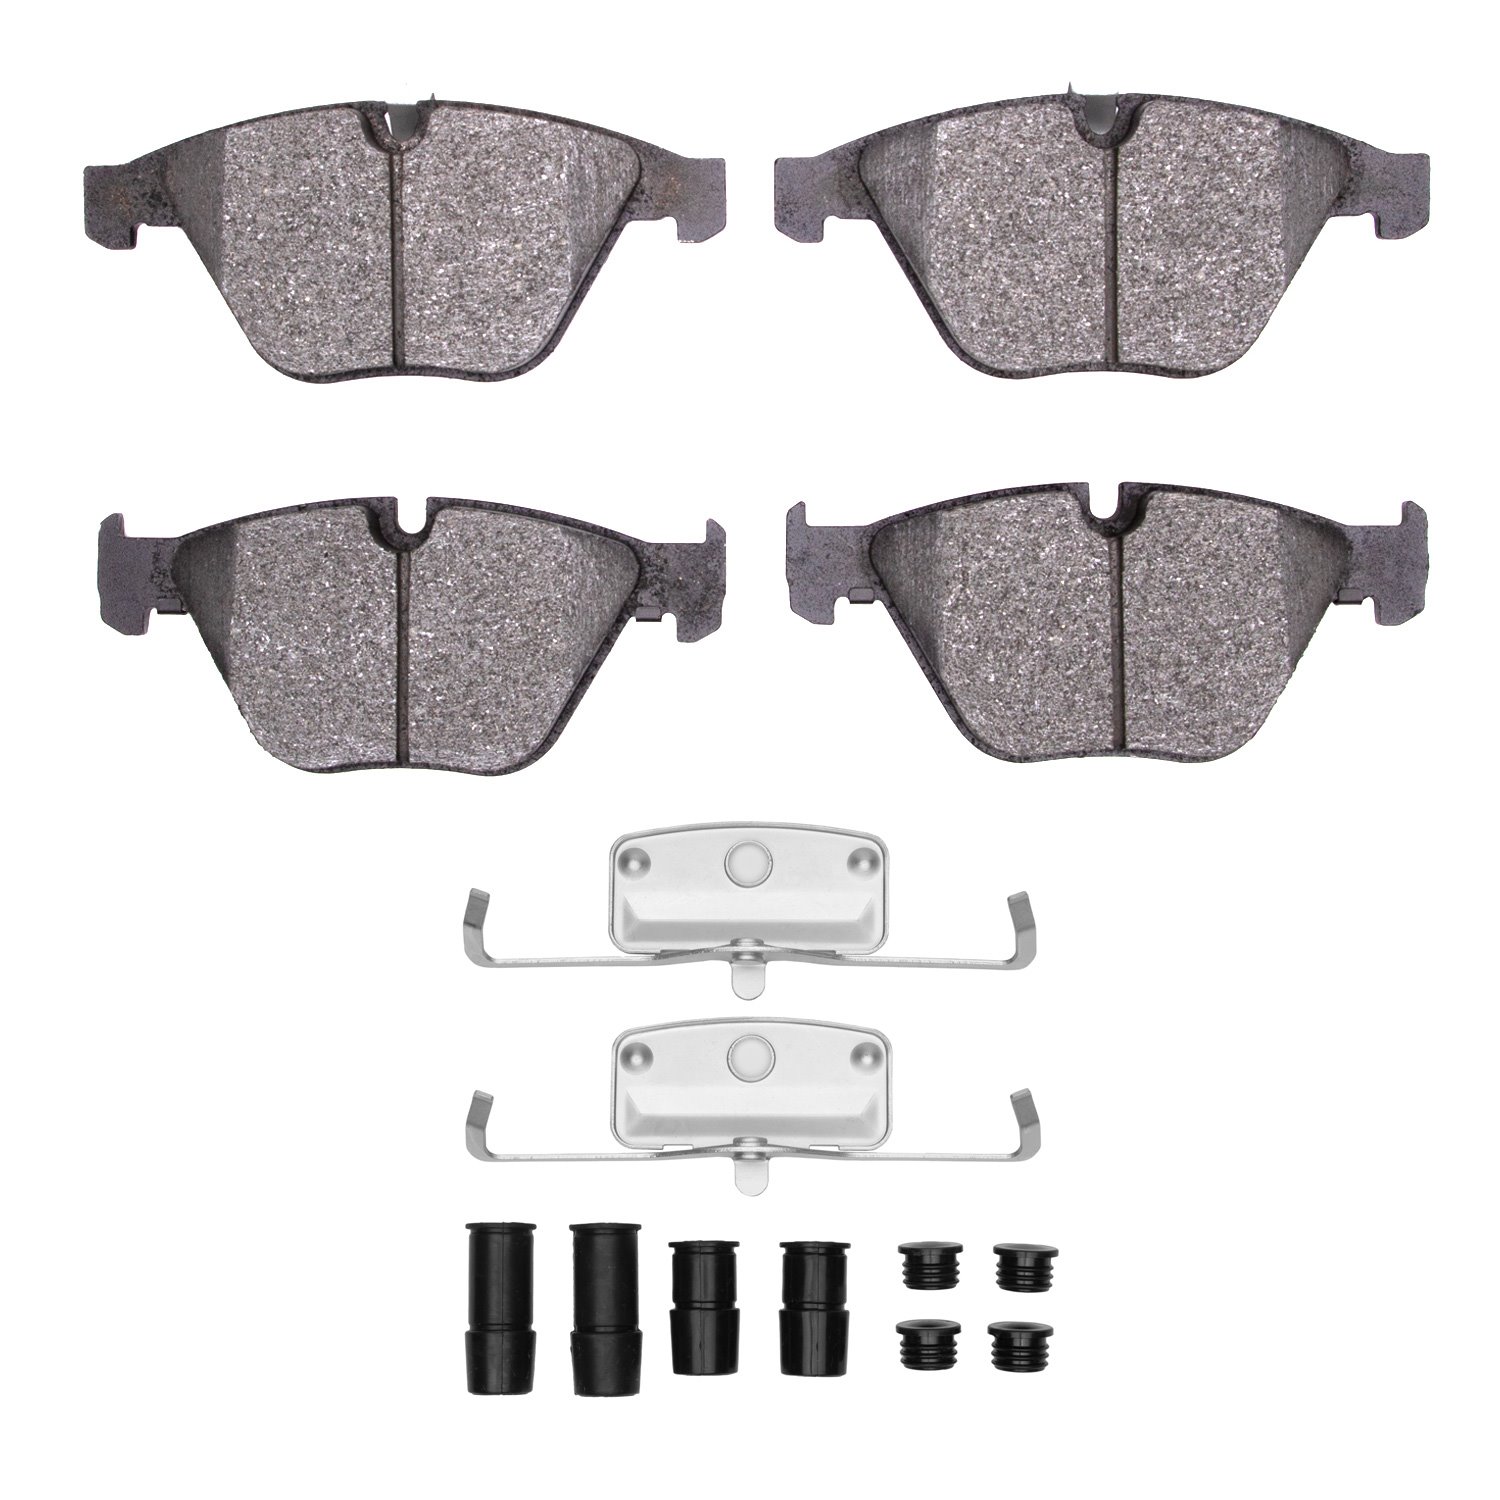 1600-0918-11 5000 Euro Ceramic Brake Pads & Hardware Kit, Fits Select BMW, Position: Front